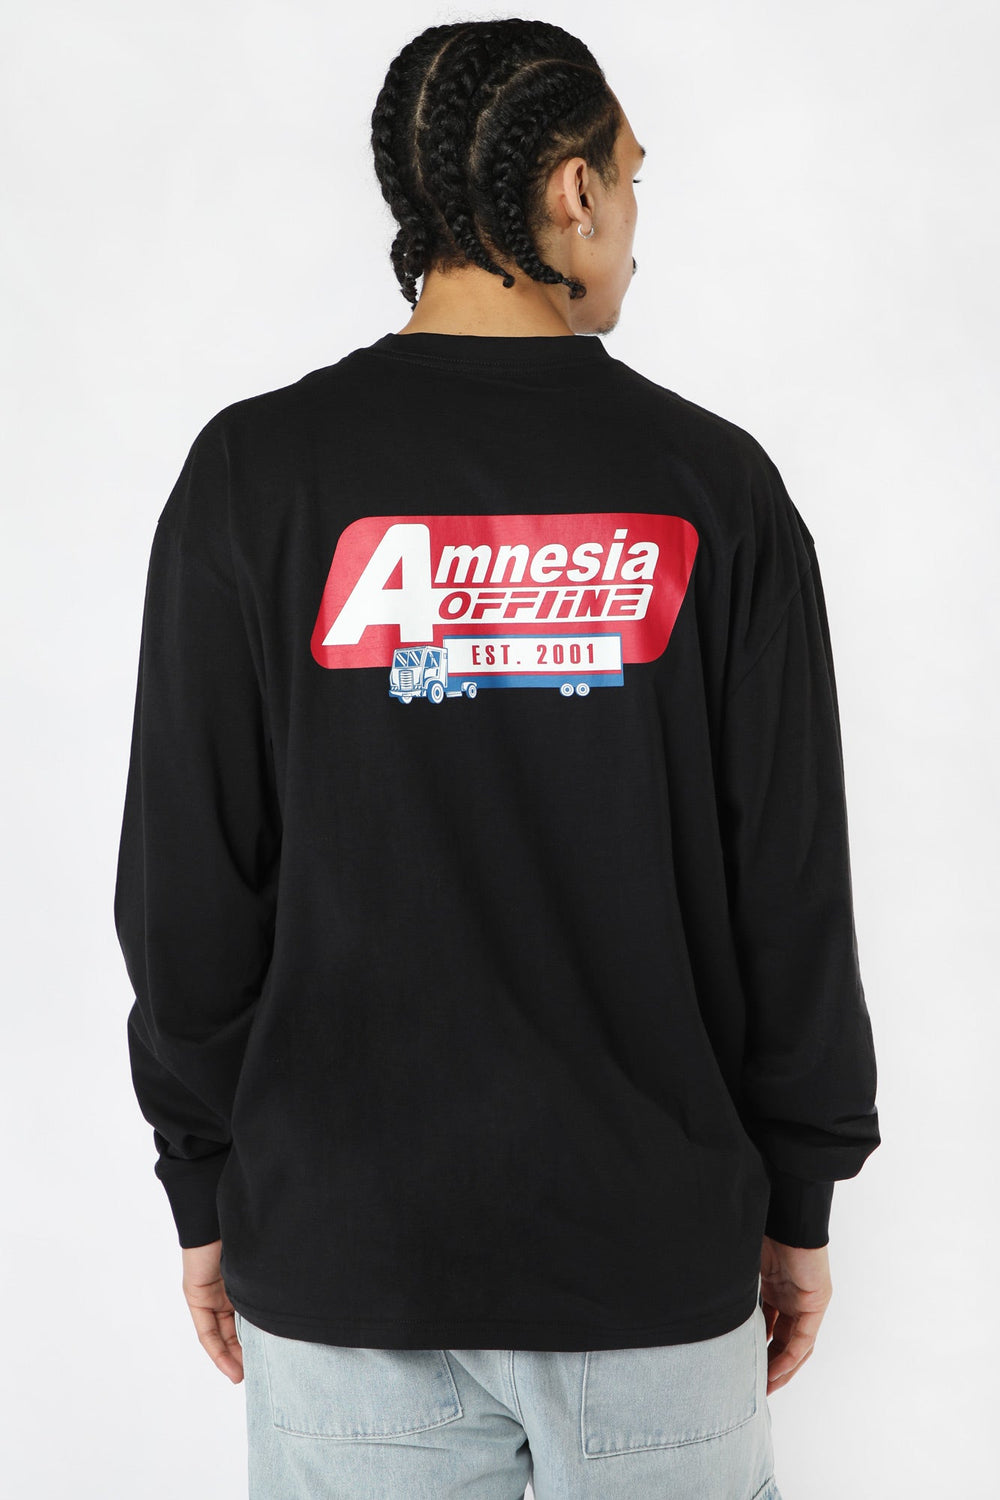 Amnesia Mens Graphic Long Sleeve Top Black